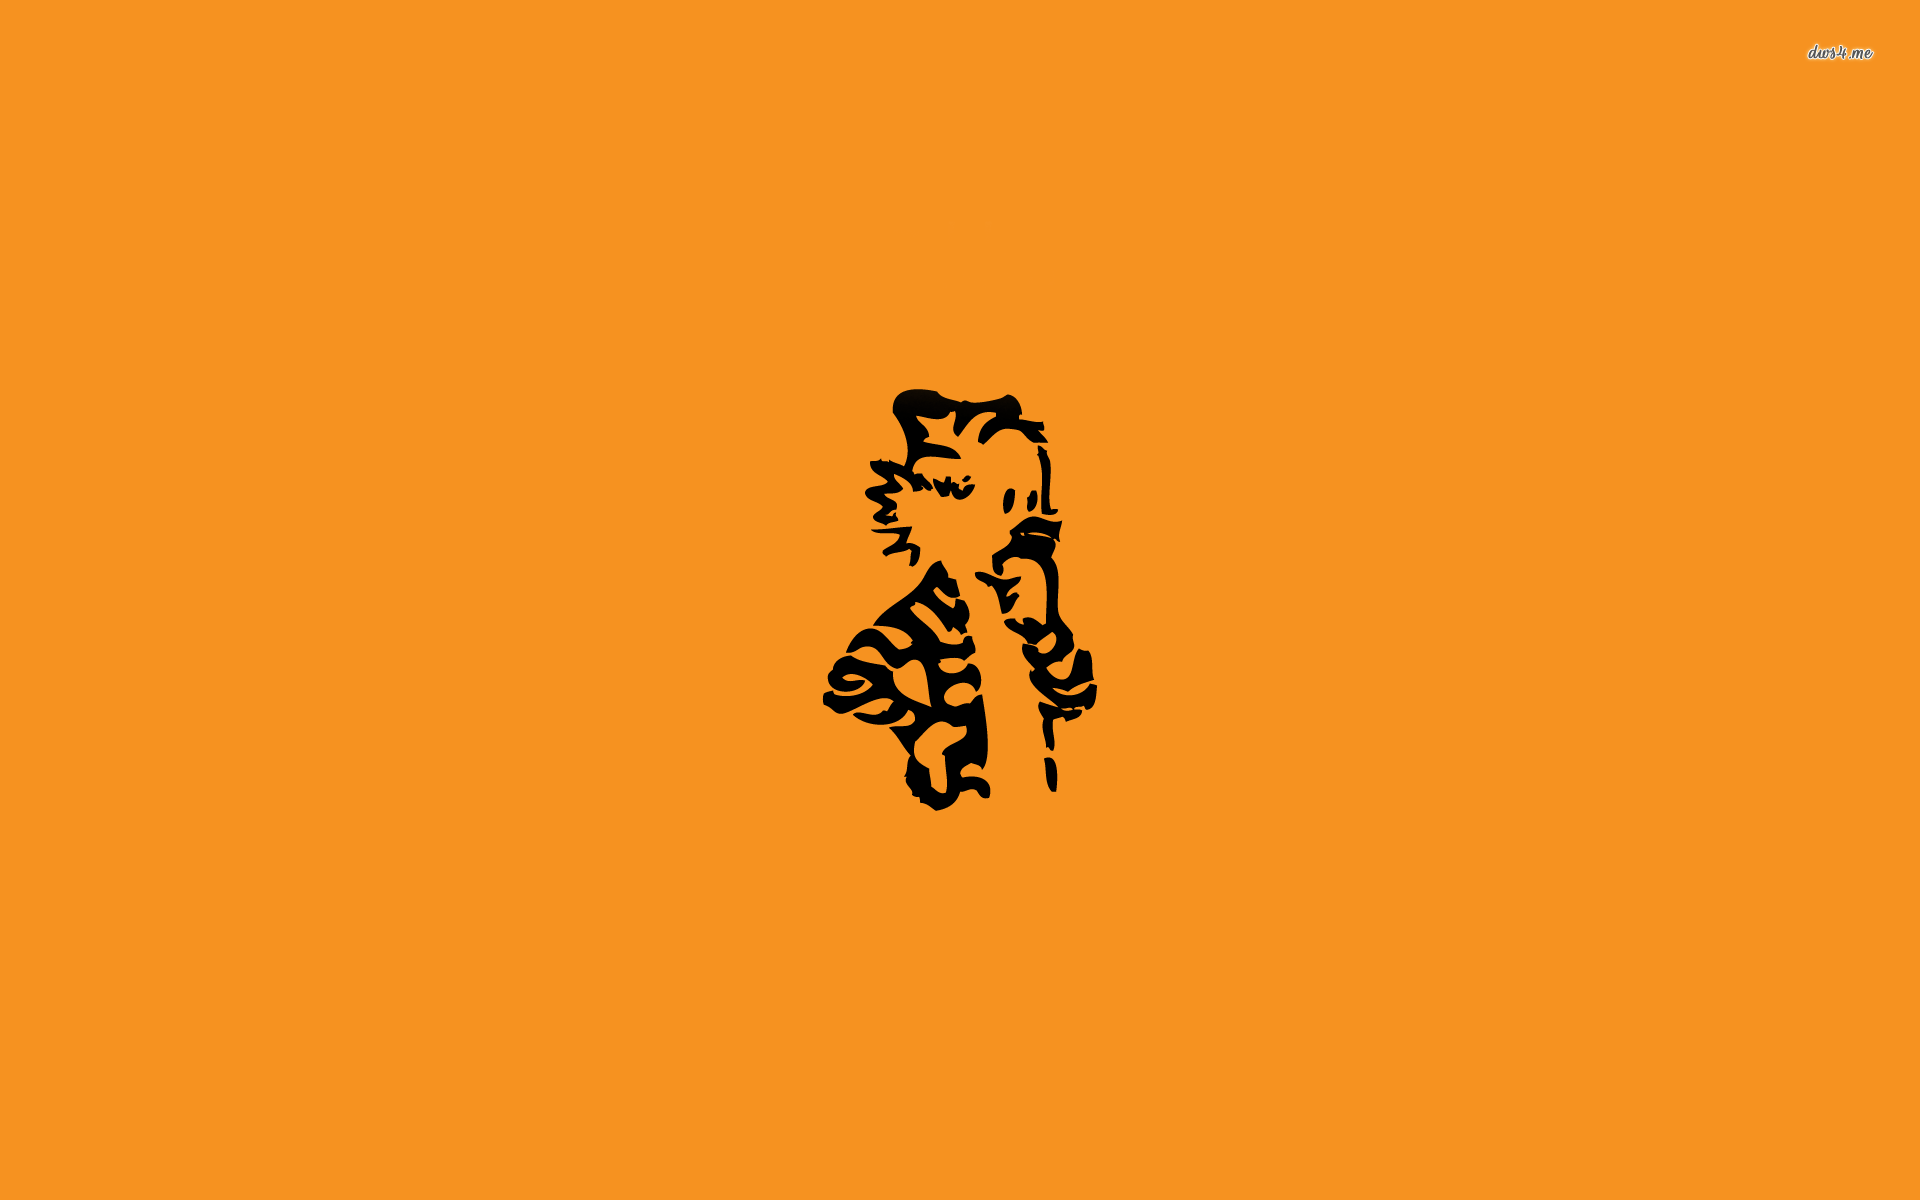 Hobbes wallpaper - Minimalistic wallpapers - #24893